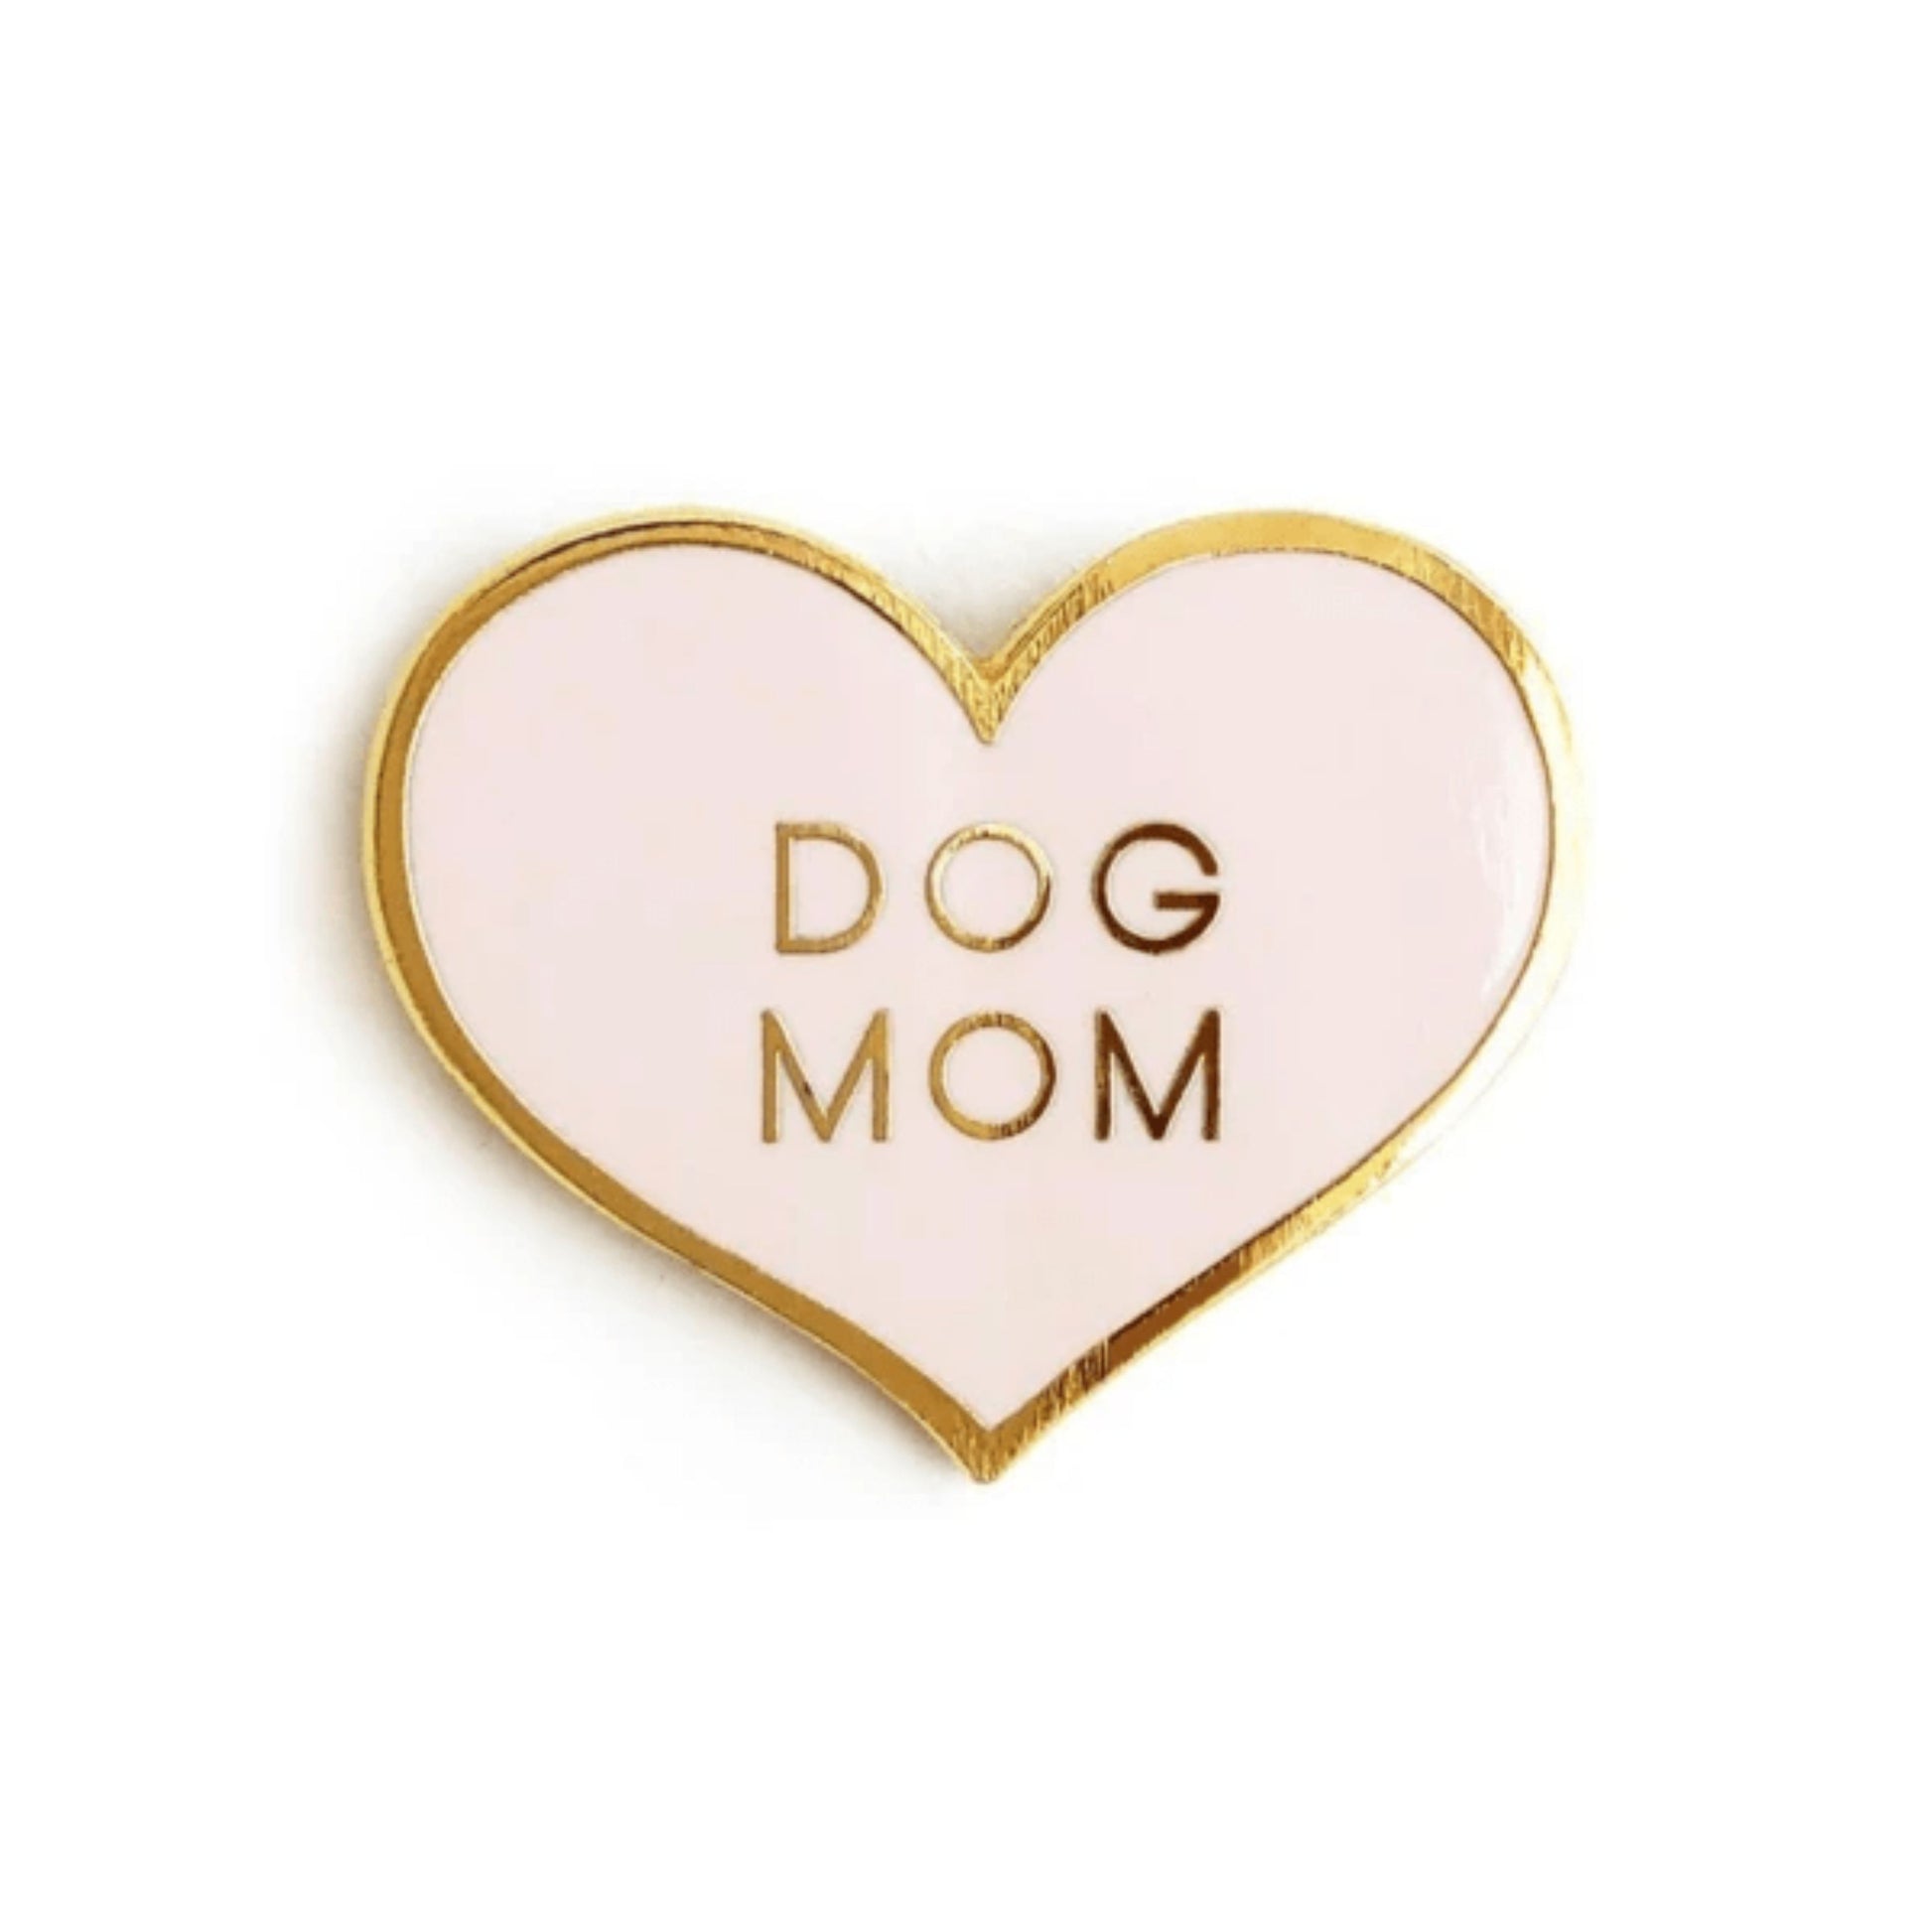 Dog Mom Pink Heart Enamel Brooch - Pet Parent Jewelry, Lapel, Pin Badge - Aksa Home Decor 